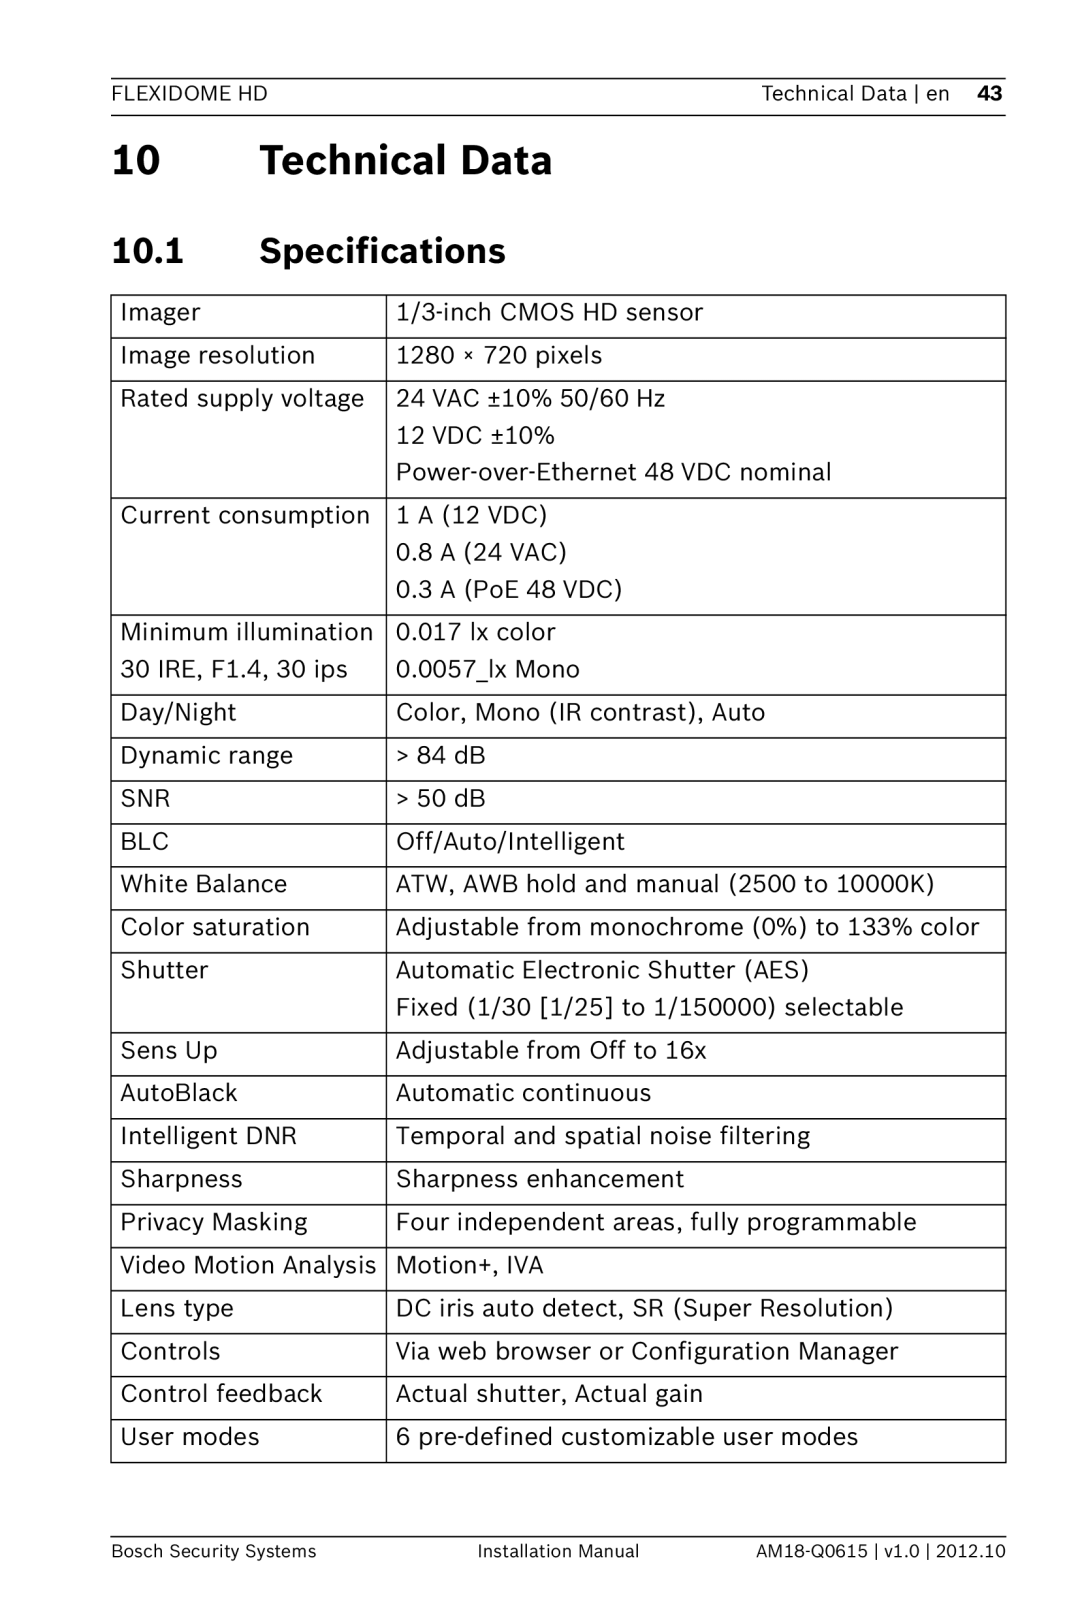 Bosch Appliances NDN-733 installation manual Technical Data, 10.1Specifications 